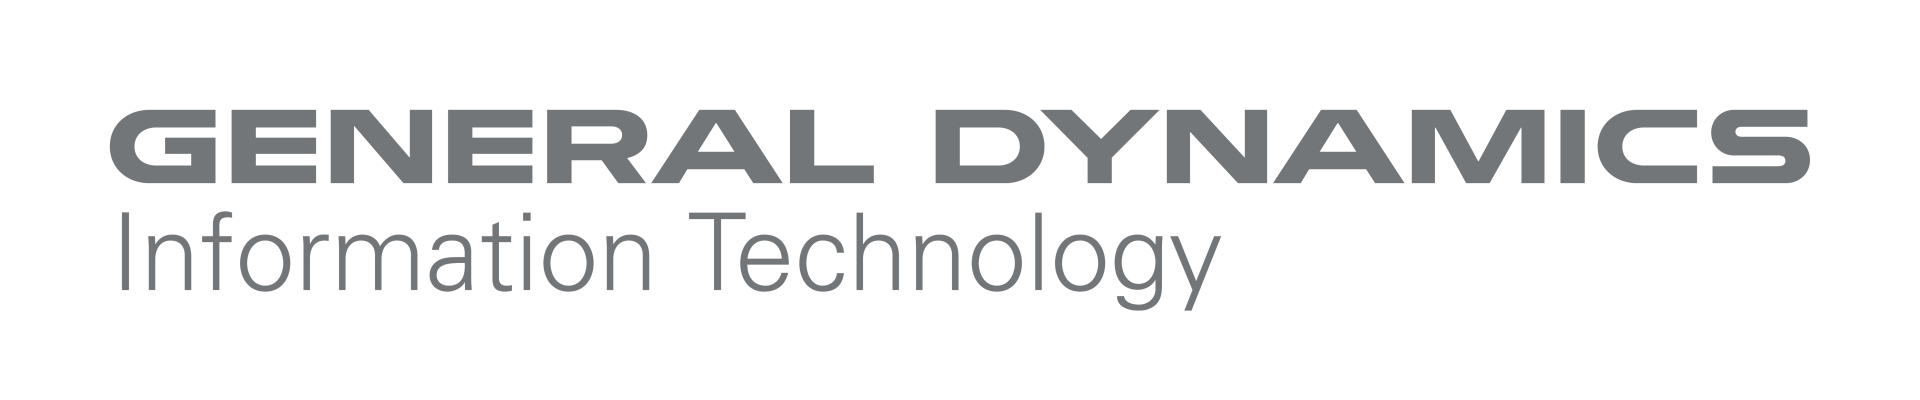 General dynamics information technology logo.